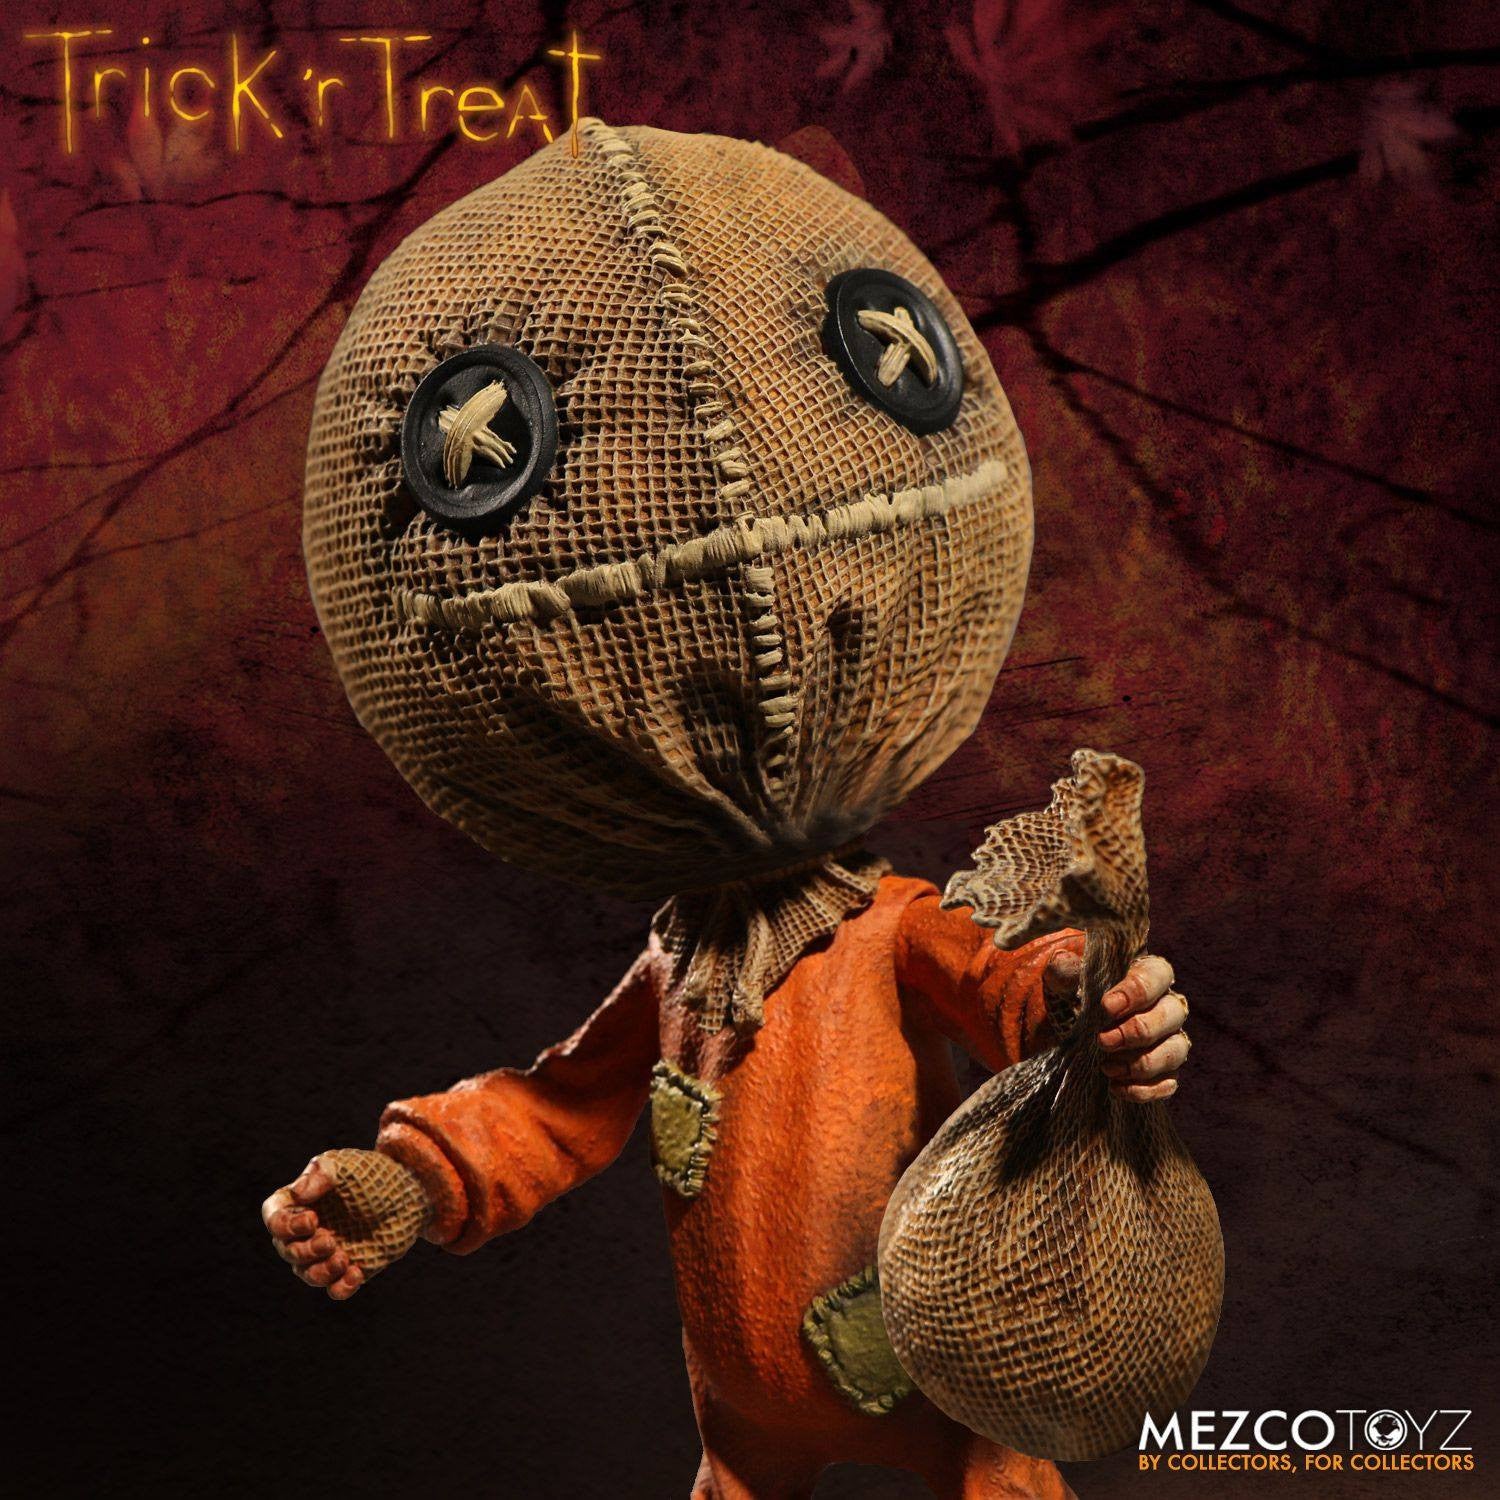 Mezco - 6" Vinyl Figure - Trick 'r Treat - Stylized Sam - Marvelous Toys - 2